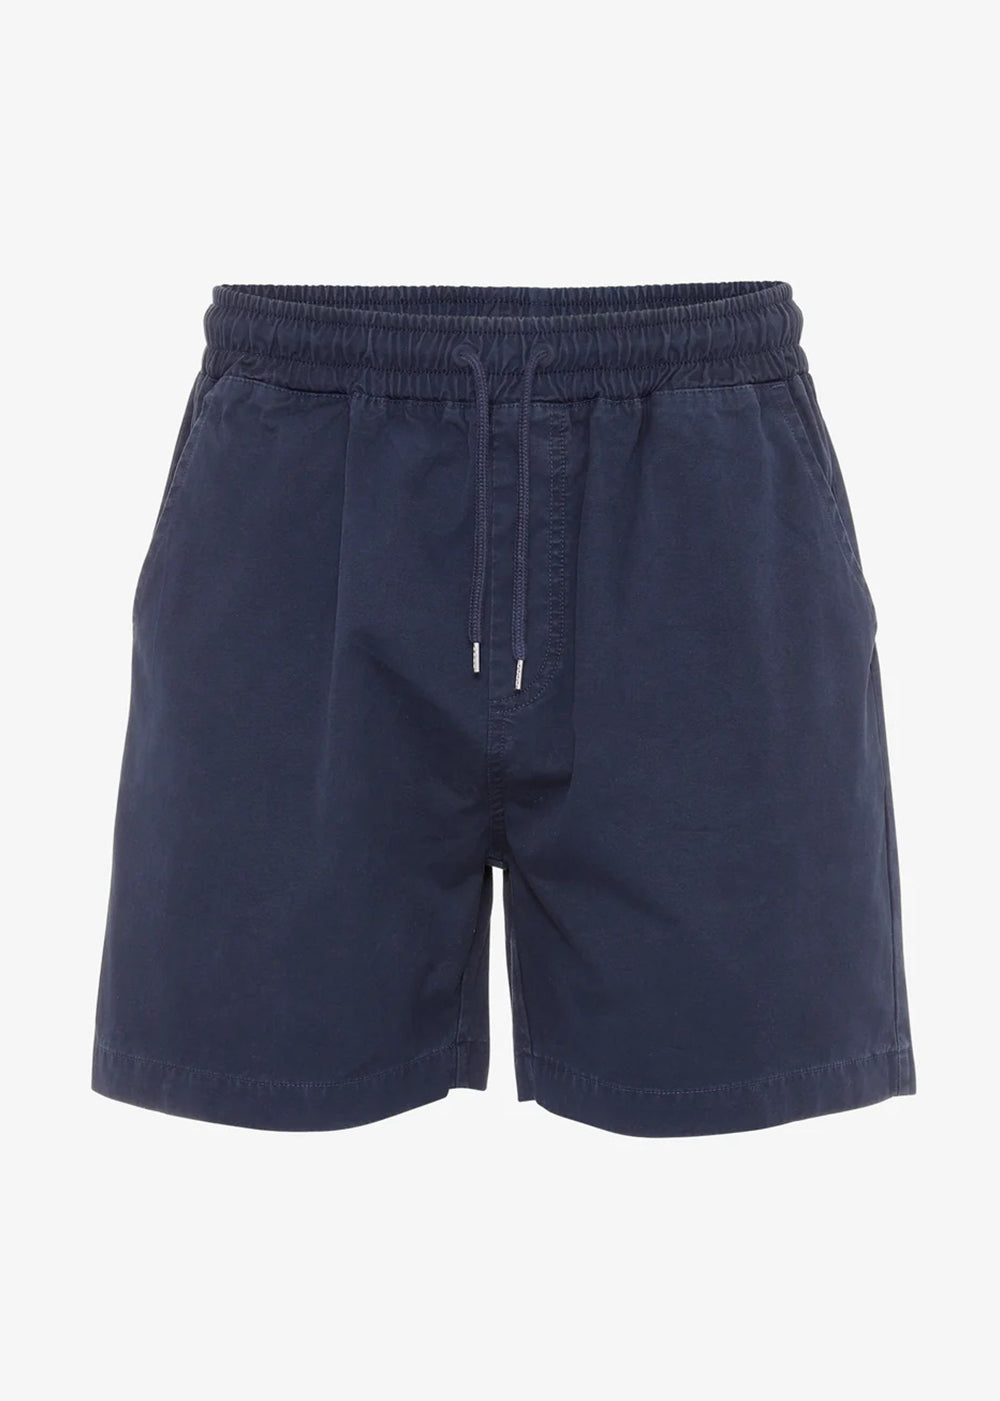 Organic Twill Shorts - Navy Blue - Colorful Standard Canada - Danali